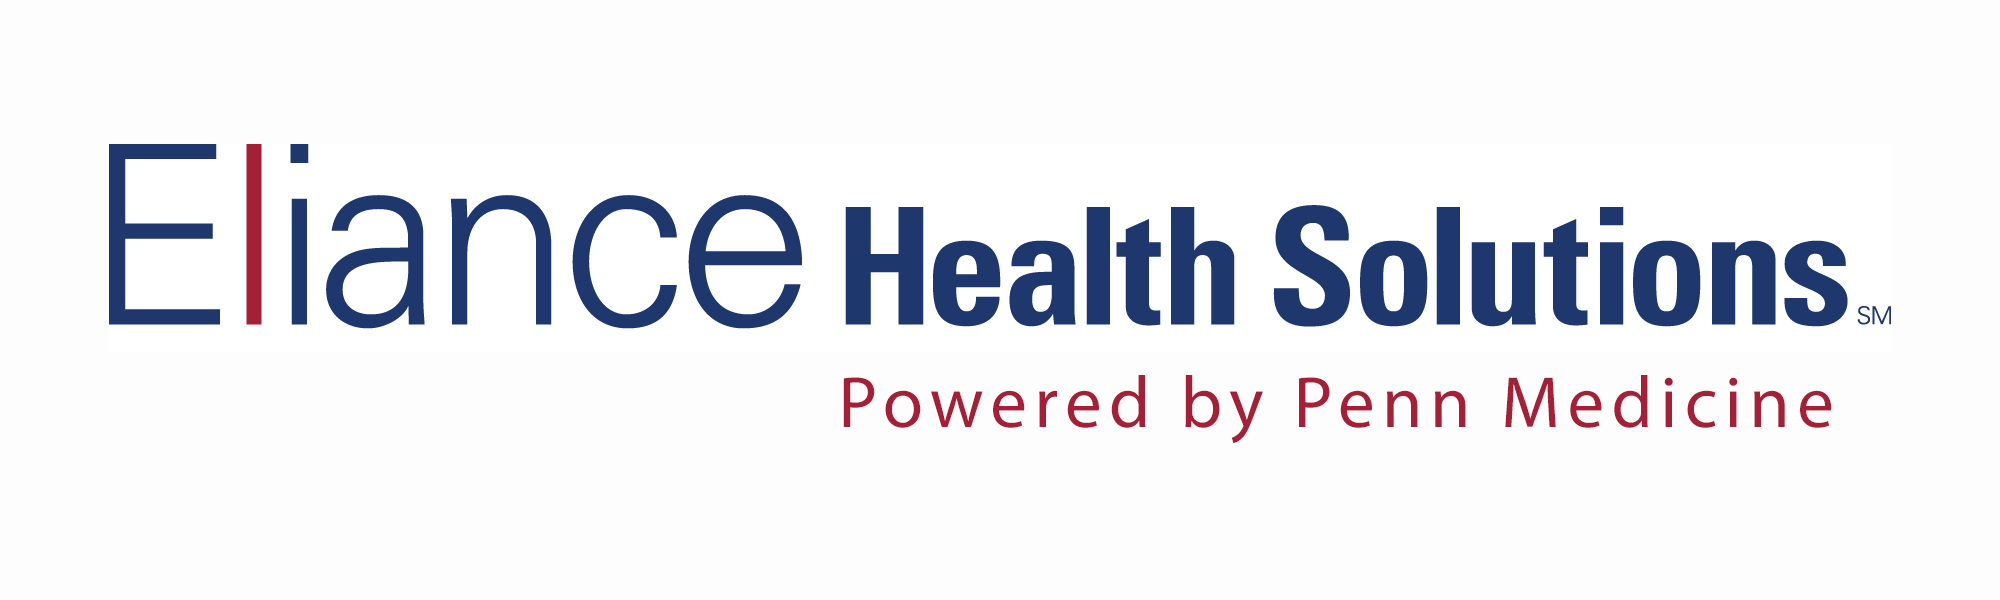 Eliance Health Solutions 